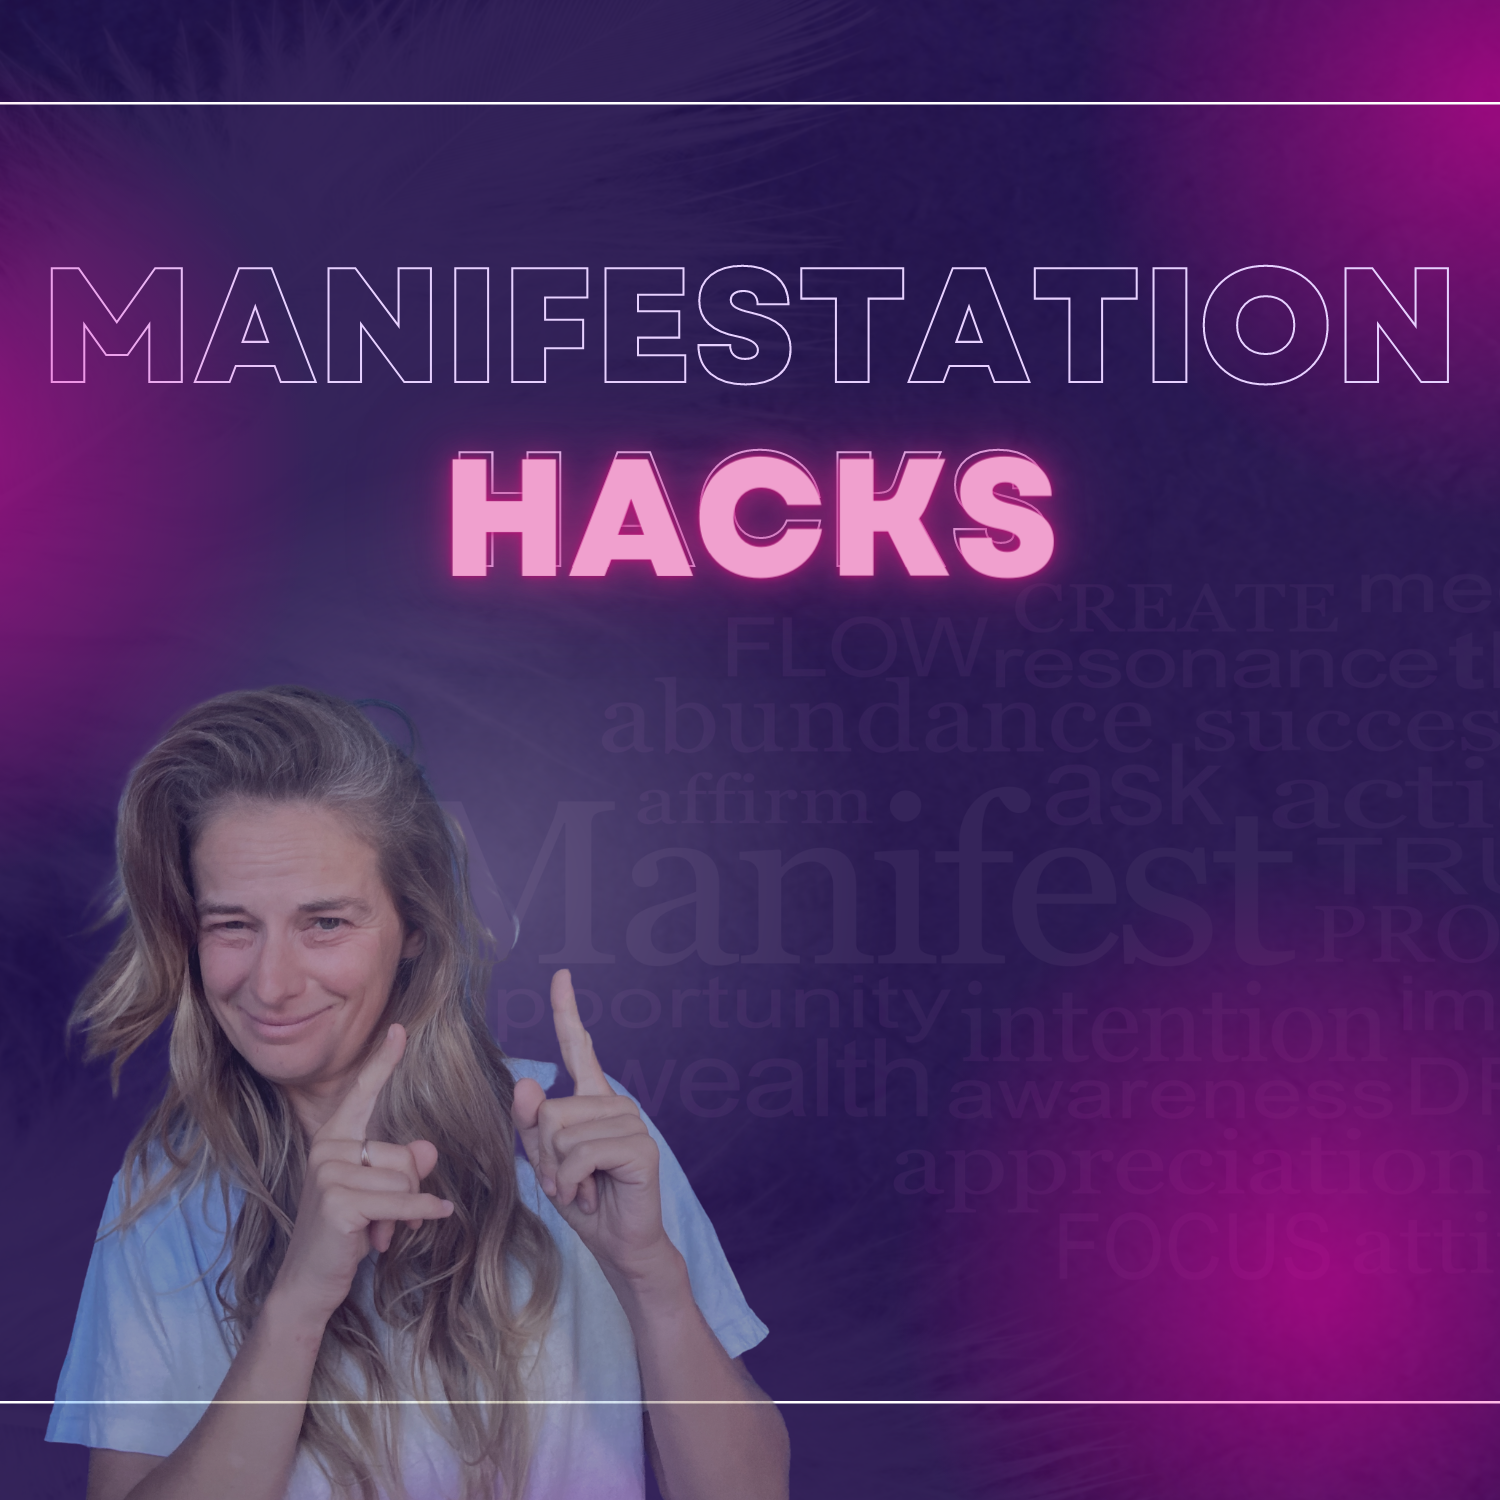 Manifestation hacks to get closer to your goals